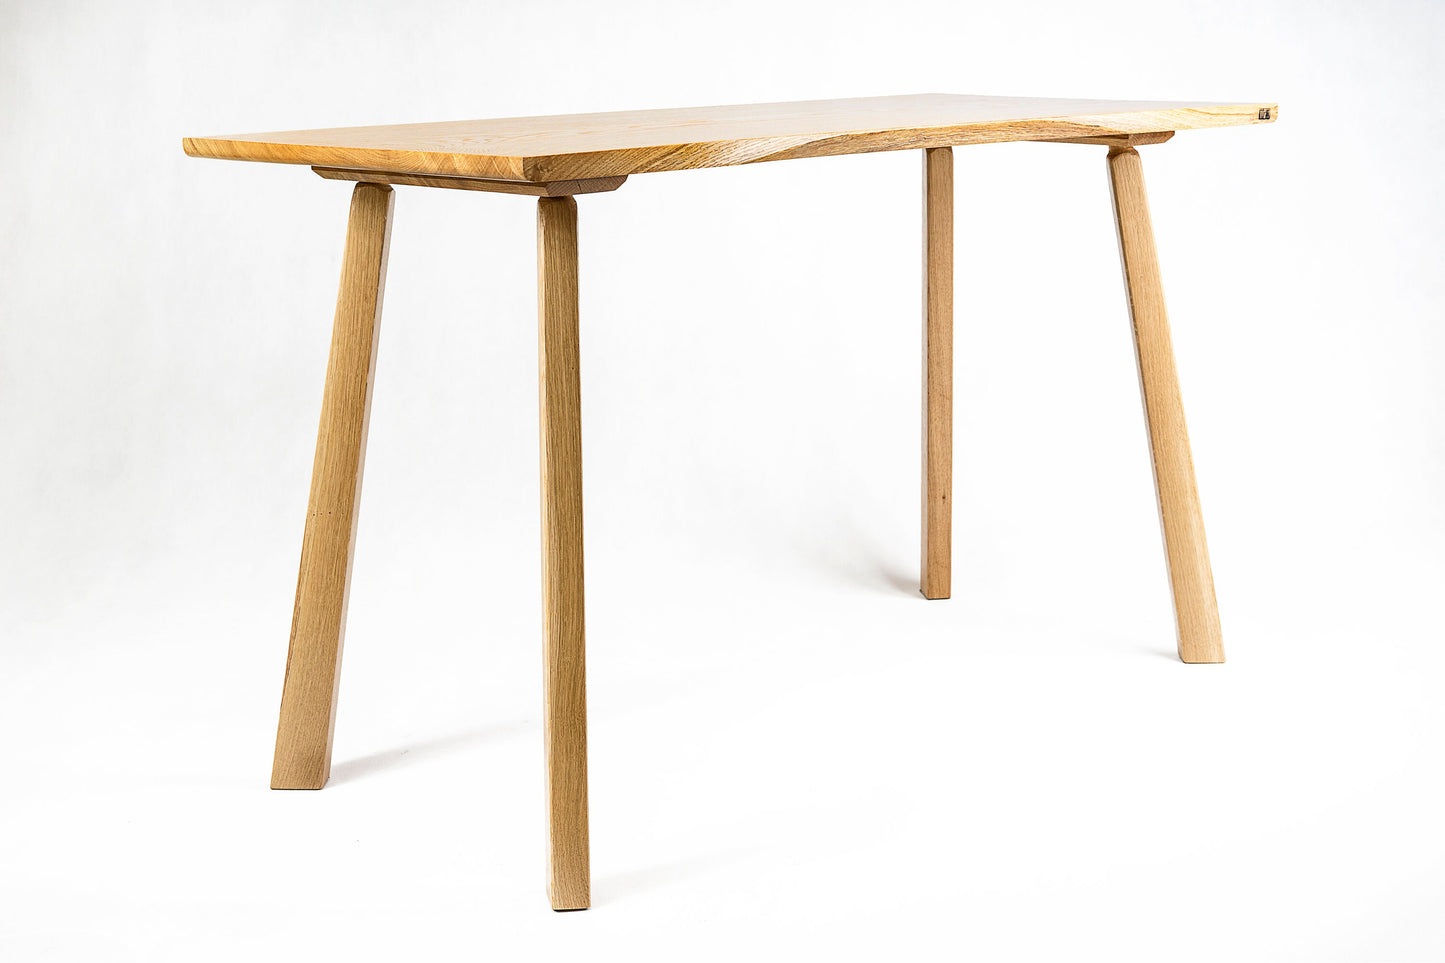 Live-edge, natural oak desk / table by M-ski